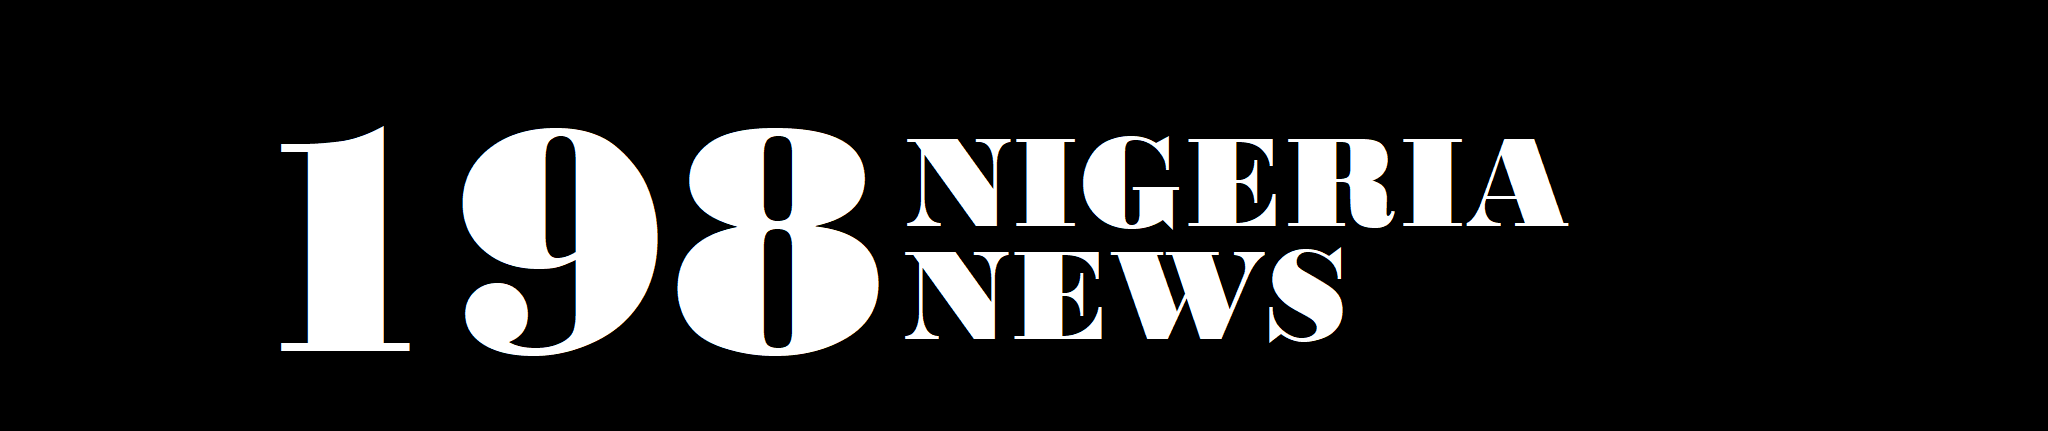 198 Nigeria News のプロファイルバナー